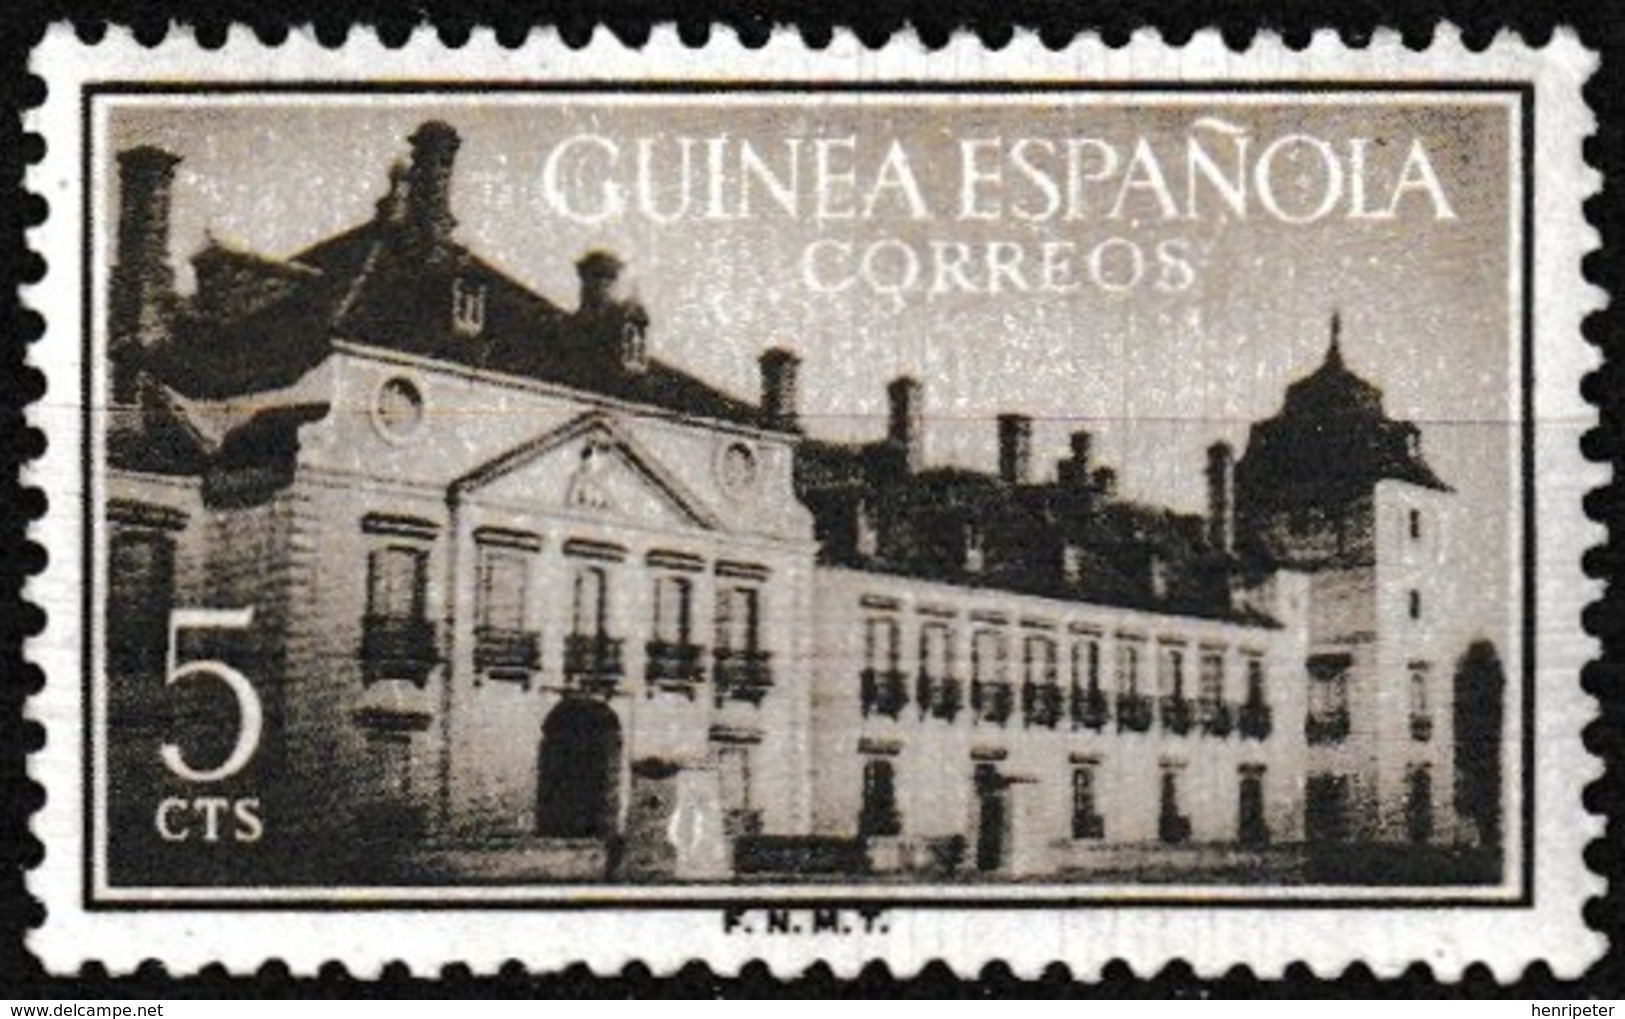 Timbre-poste Neuf Charnière - Prado National Museum In Madrid - N° 368 (Yvert) - Guinée Espagnole 1955 - Guinée Espagnole